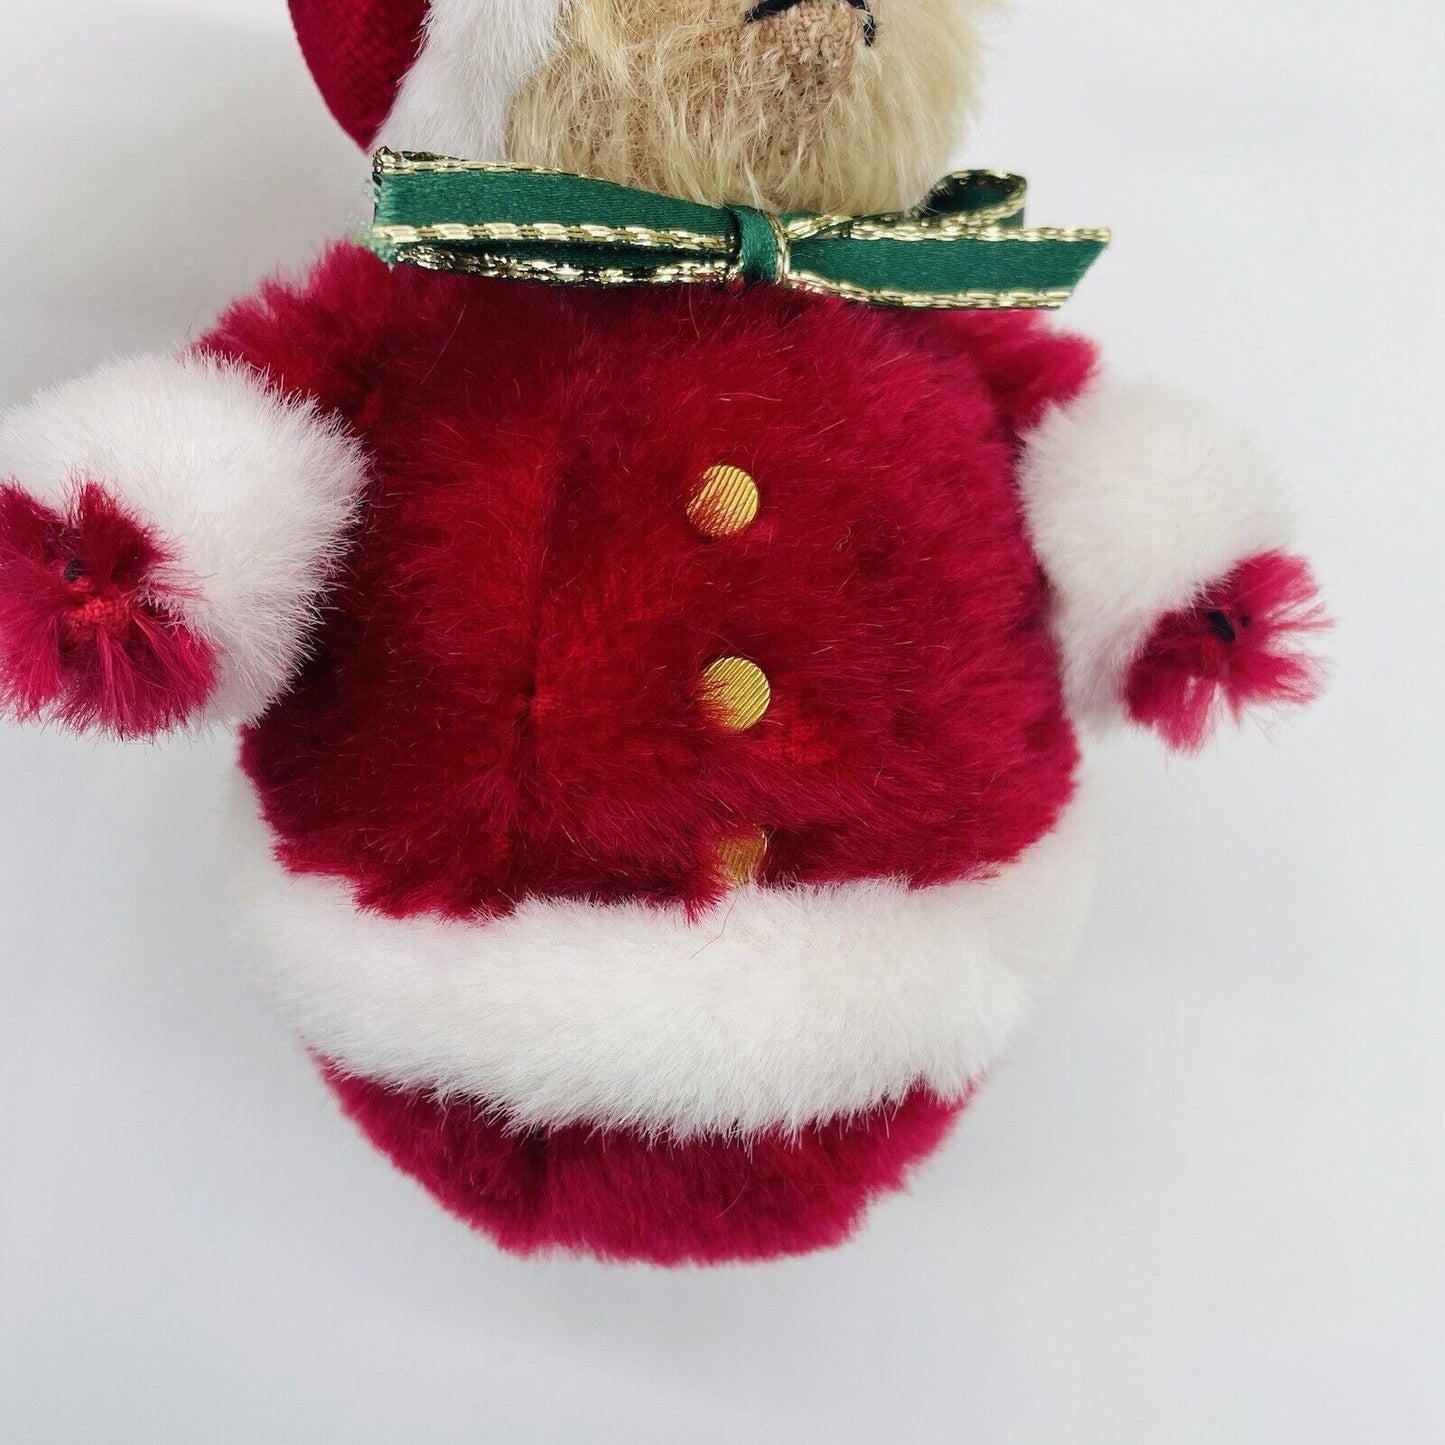 Steiff Weihnachtsmann Roly Poly Santa 037894 North America 12cm